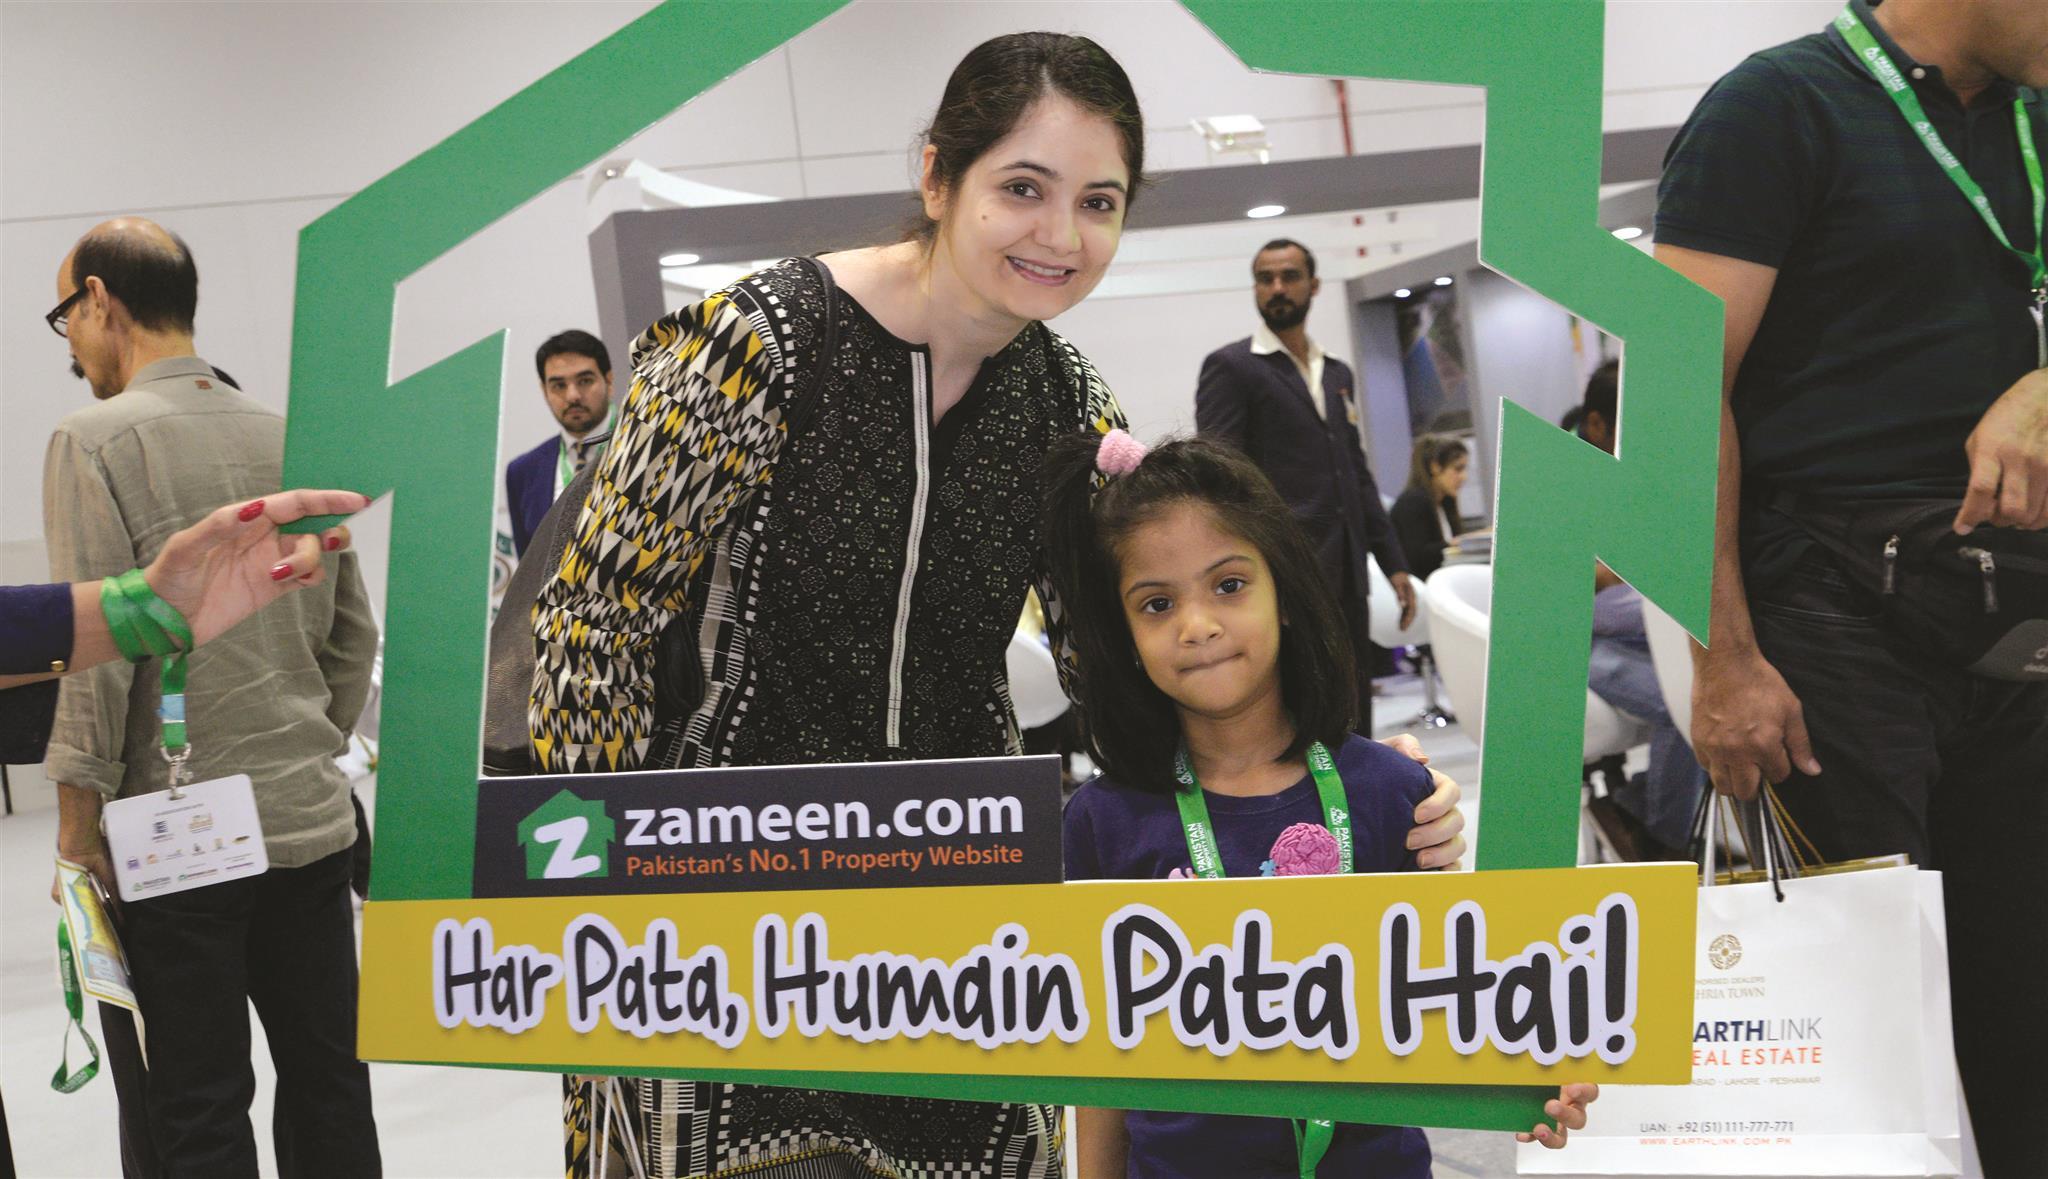 Zameen.com’s Pakistan Property Show set to return to Dubai on September 14-15